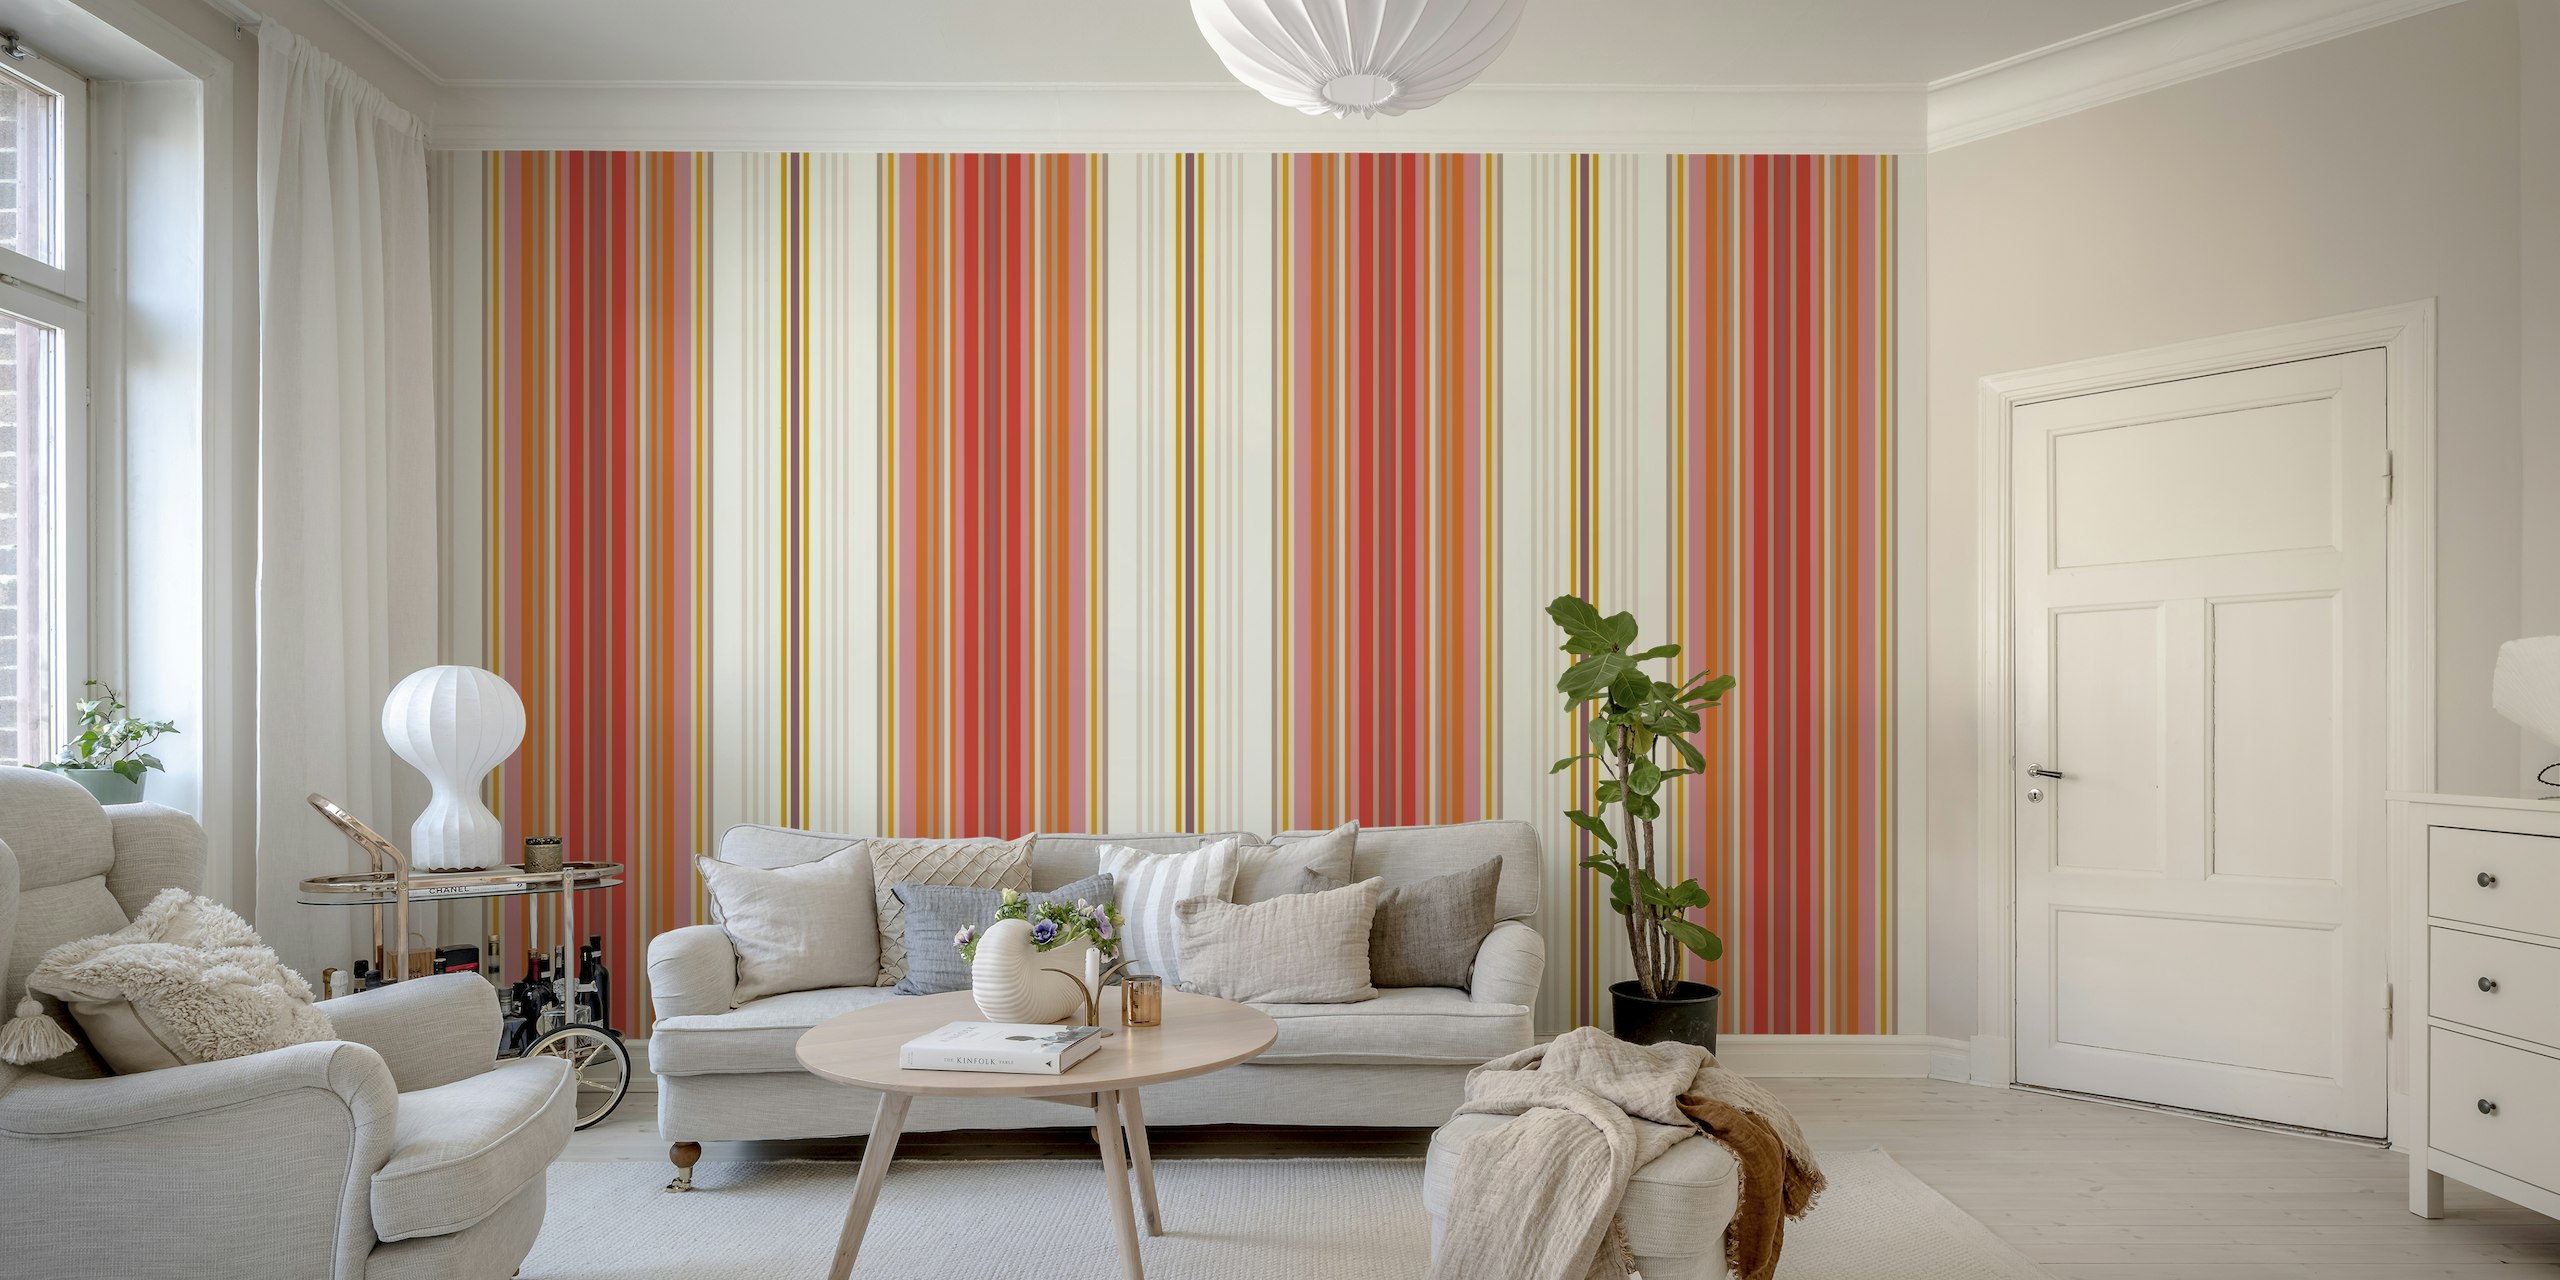 70s striped wallpaper - Red behang